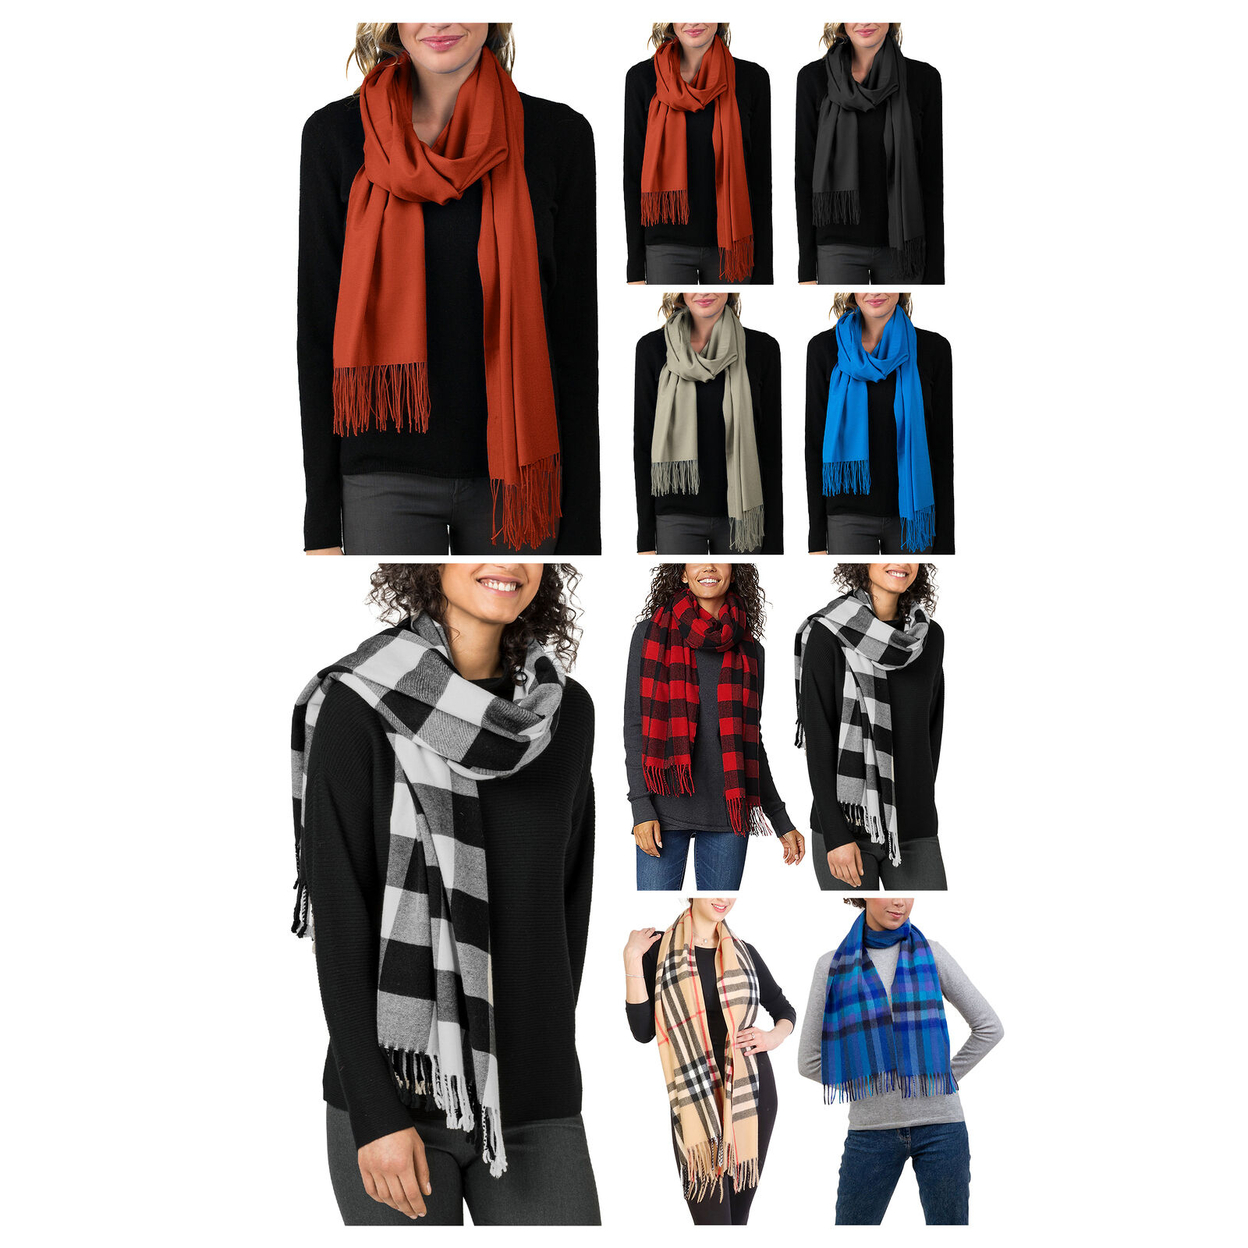 3-Pack: Women's Ultra Soft Neutral & Bright Cashmere Feel Winter Warm Scarfs - Neutral